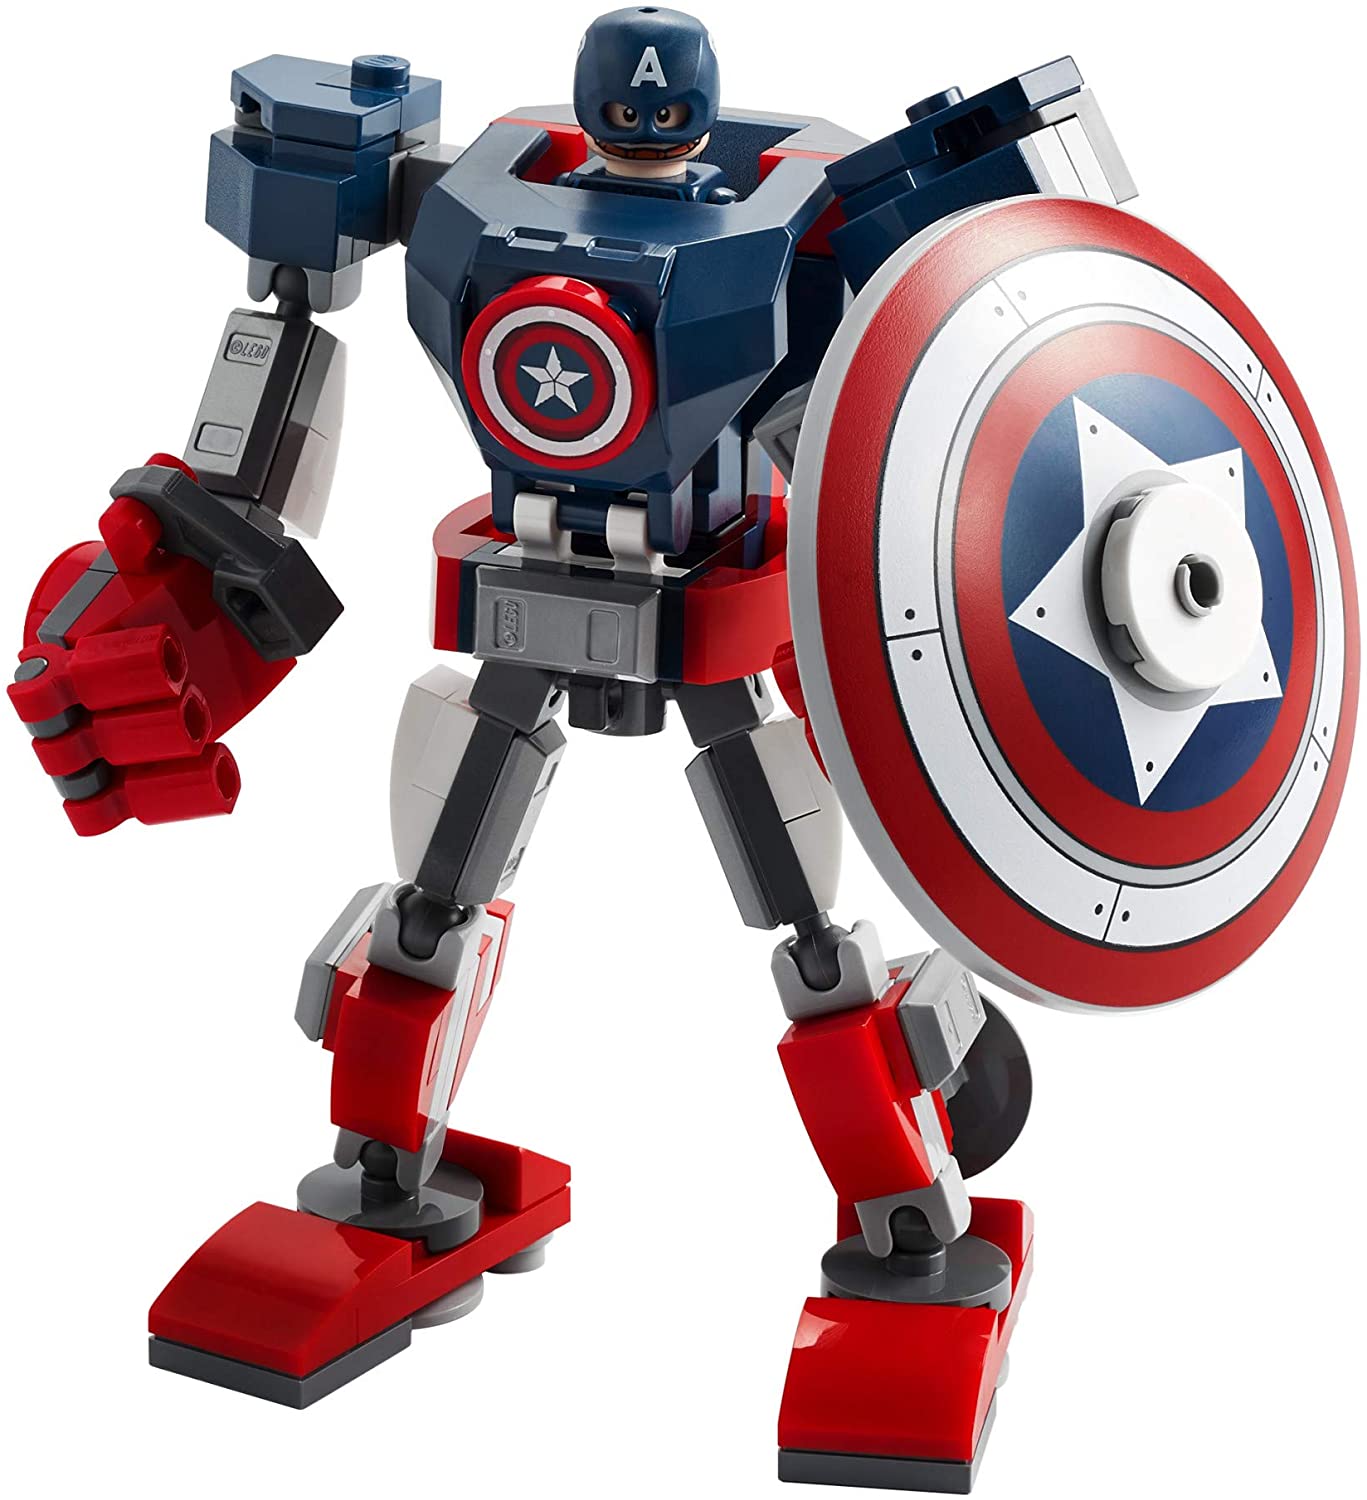 Captain America Mech Armor, 76168 | LEGO® Marvel